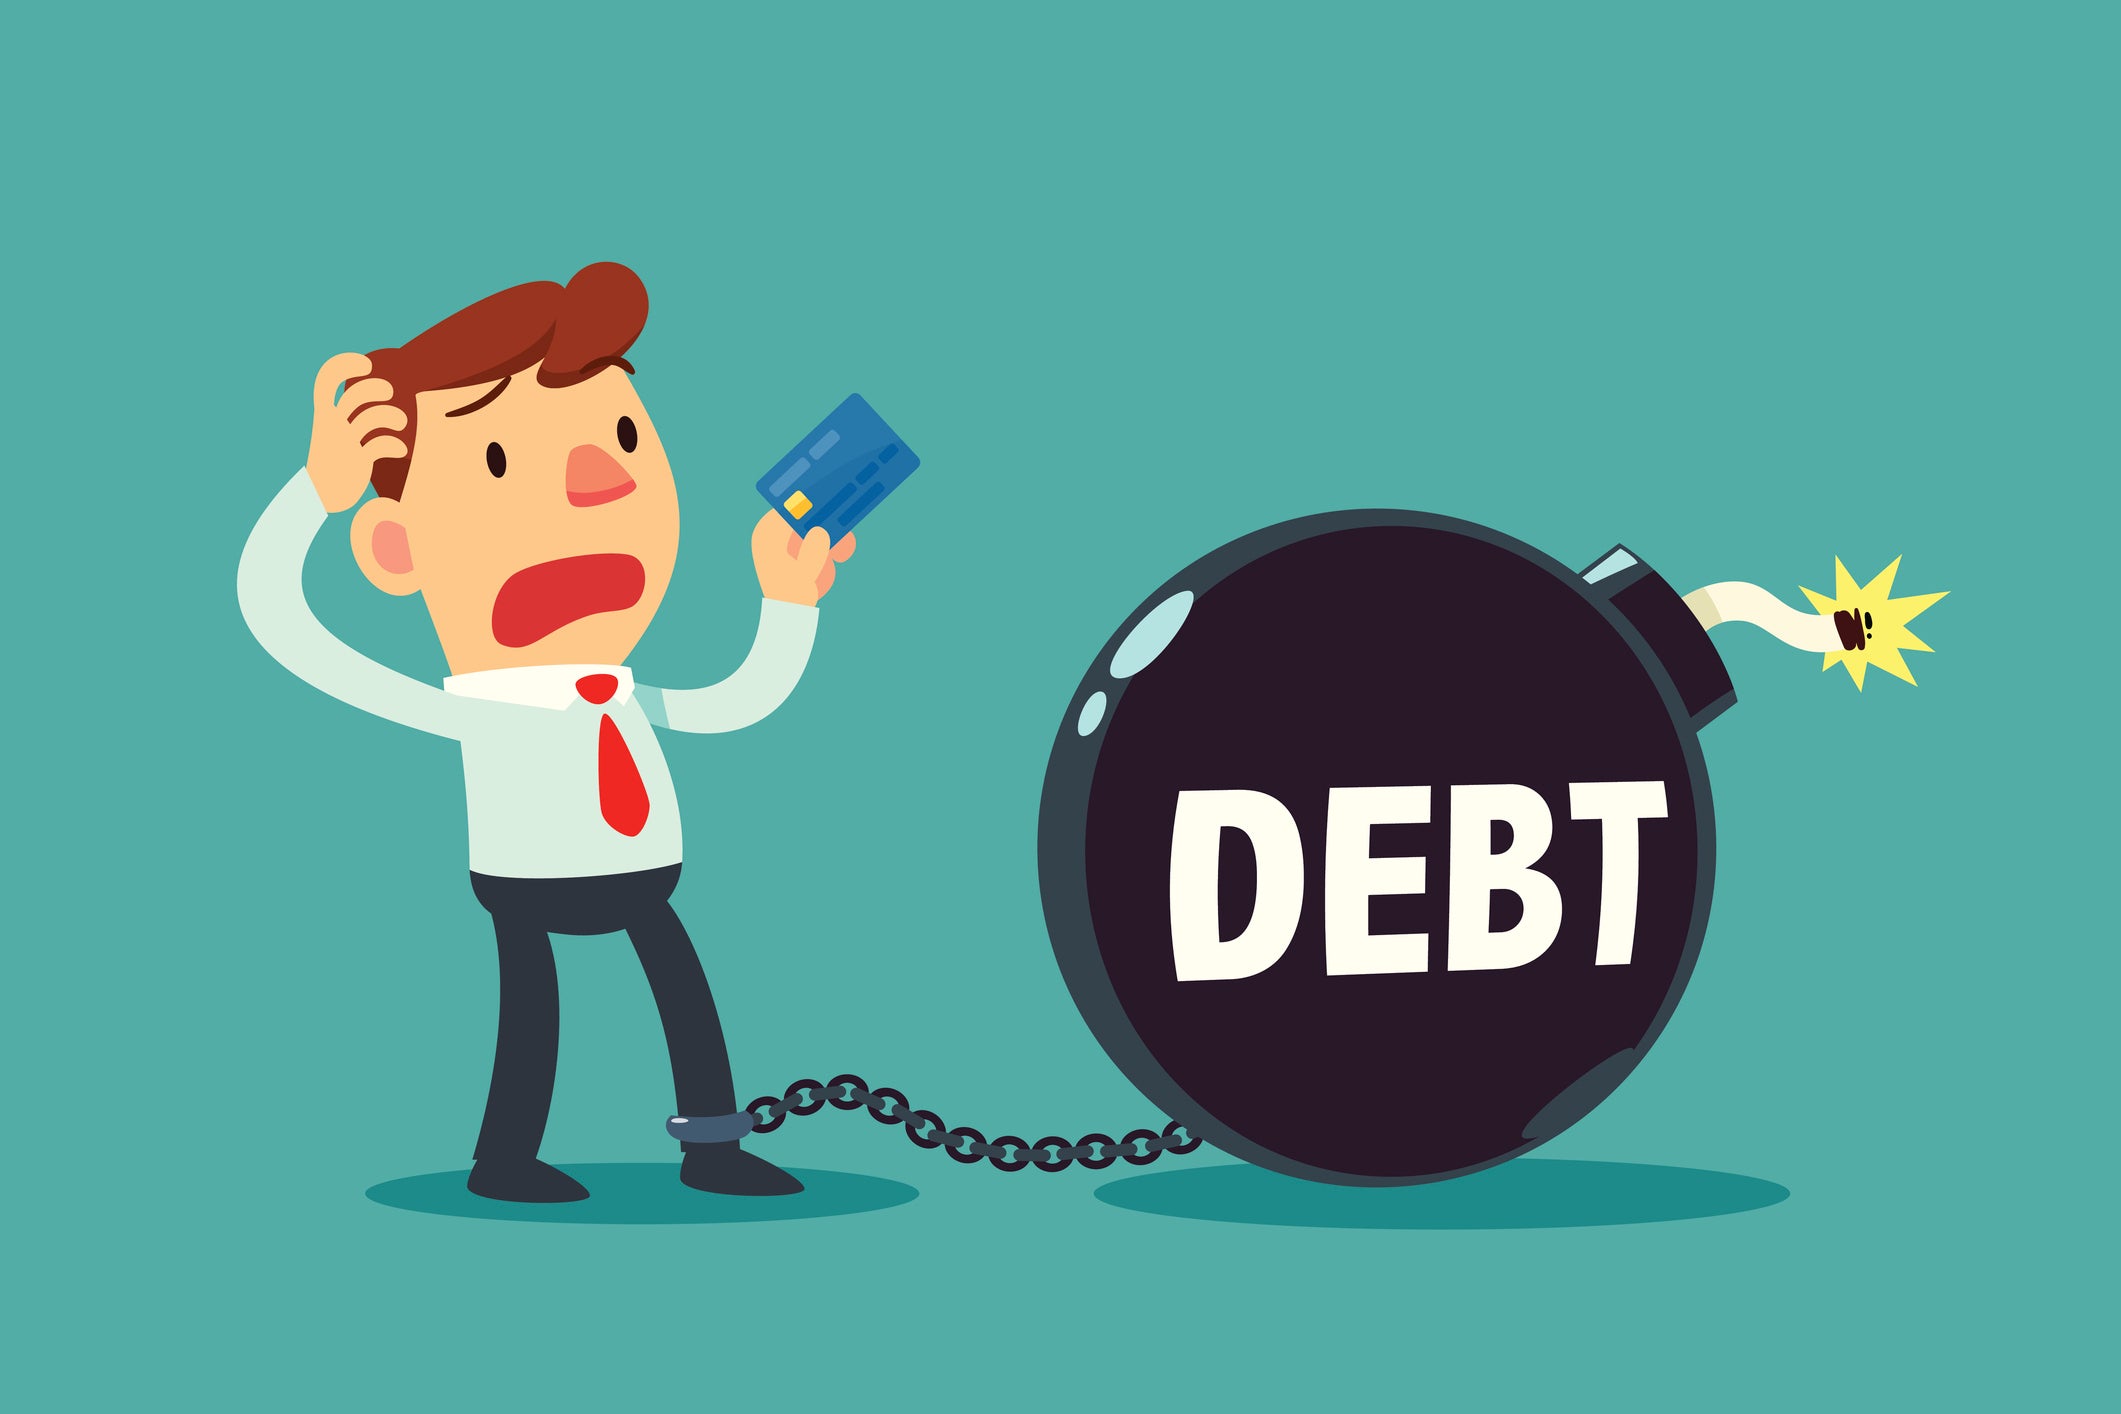 high interest debt - W! Debt 00000